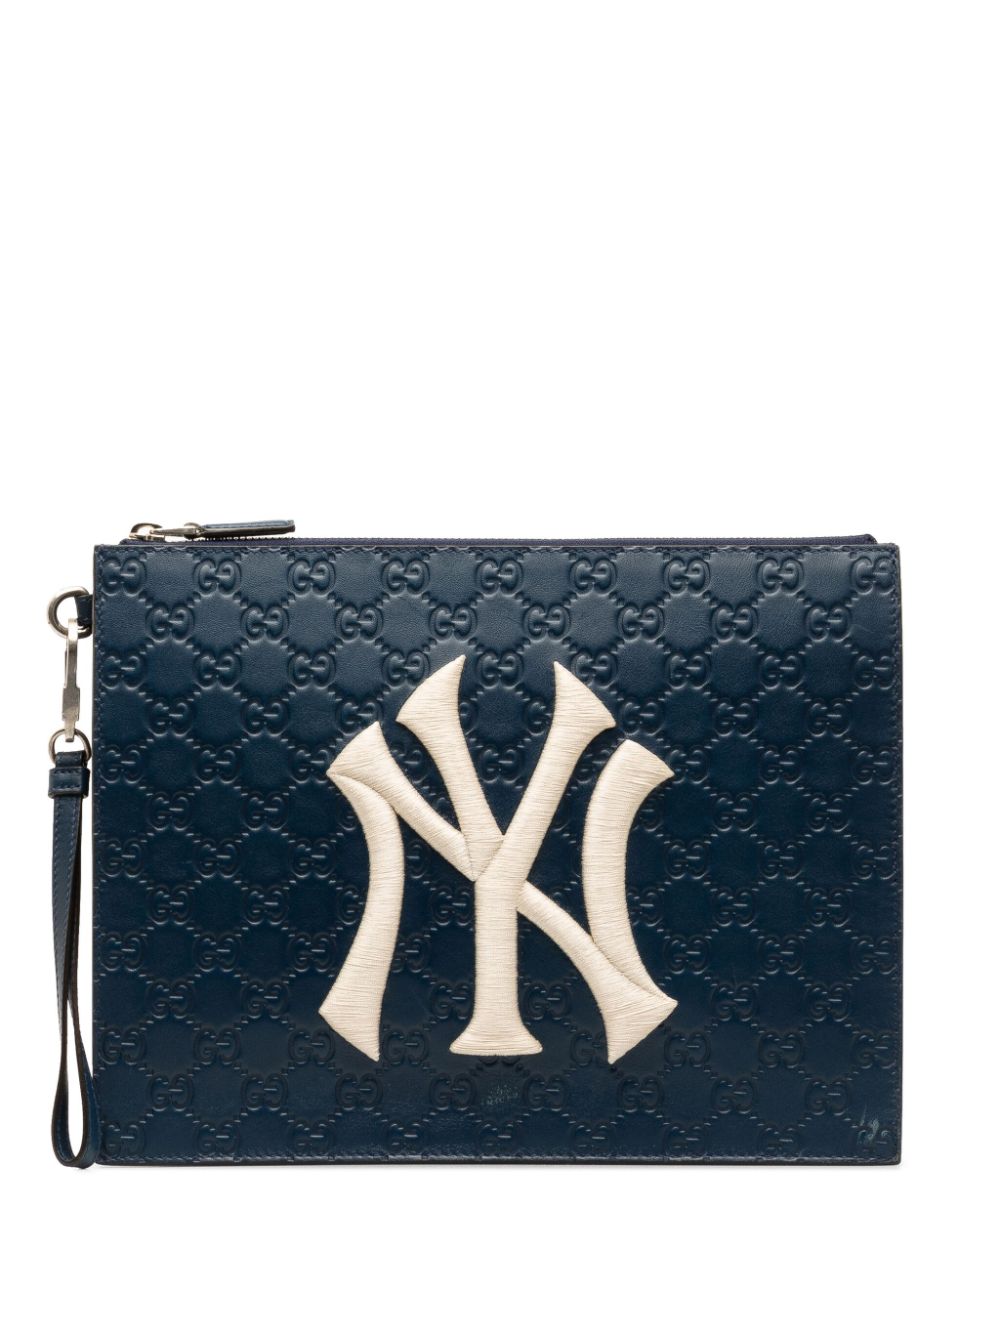 2016-2022 Guccissima NY Yankees Zip clutch bag